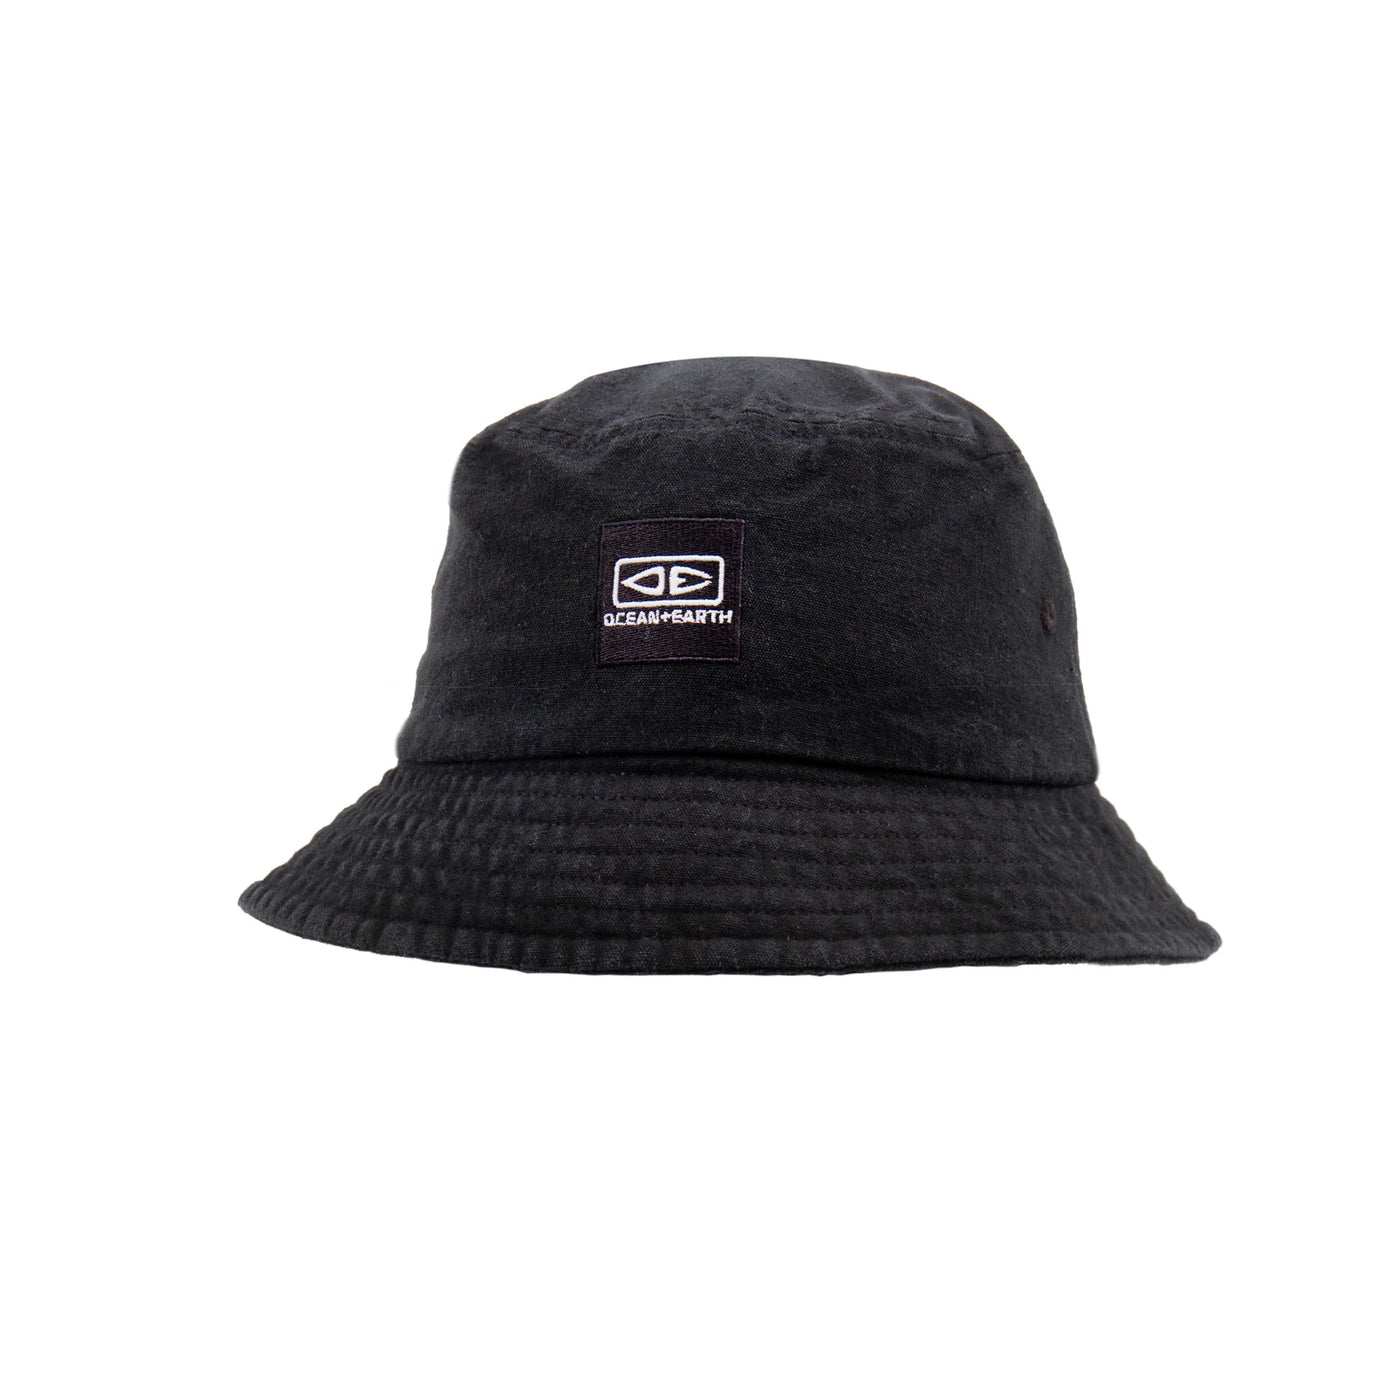 Ocean & Earth Corp Bucket Hat Gorro Pescador